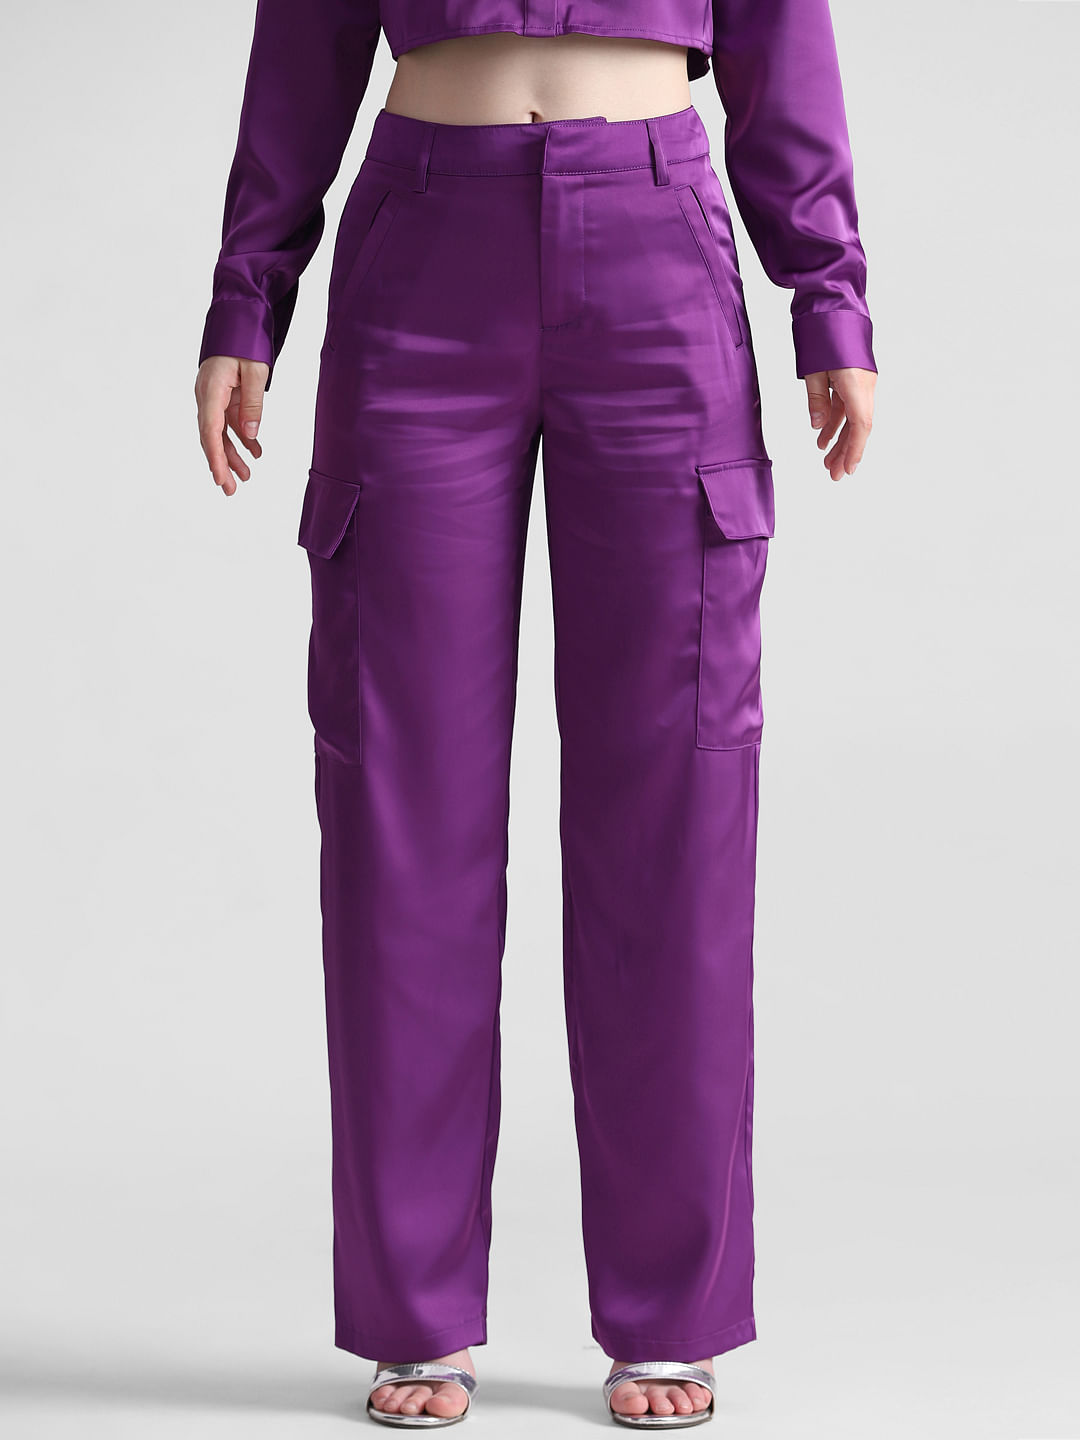 Buy Rad prix Purple Cargo Pants at Amazonin